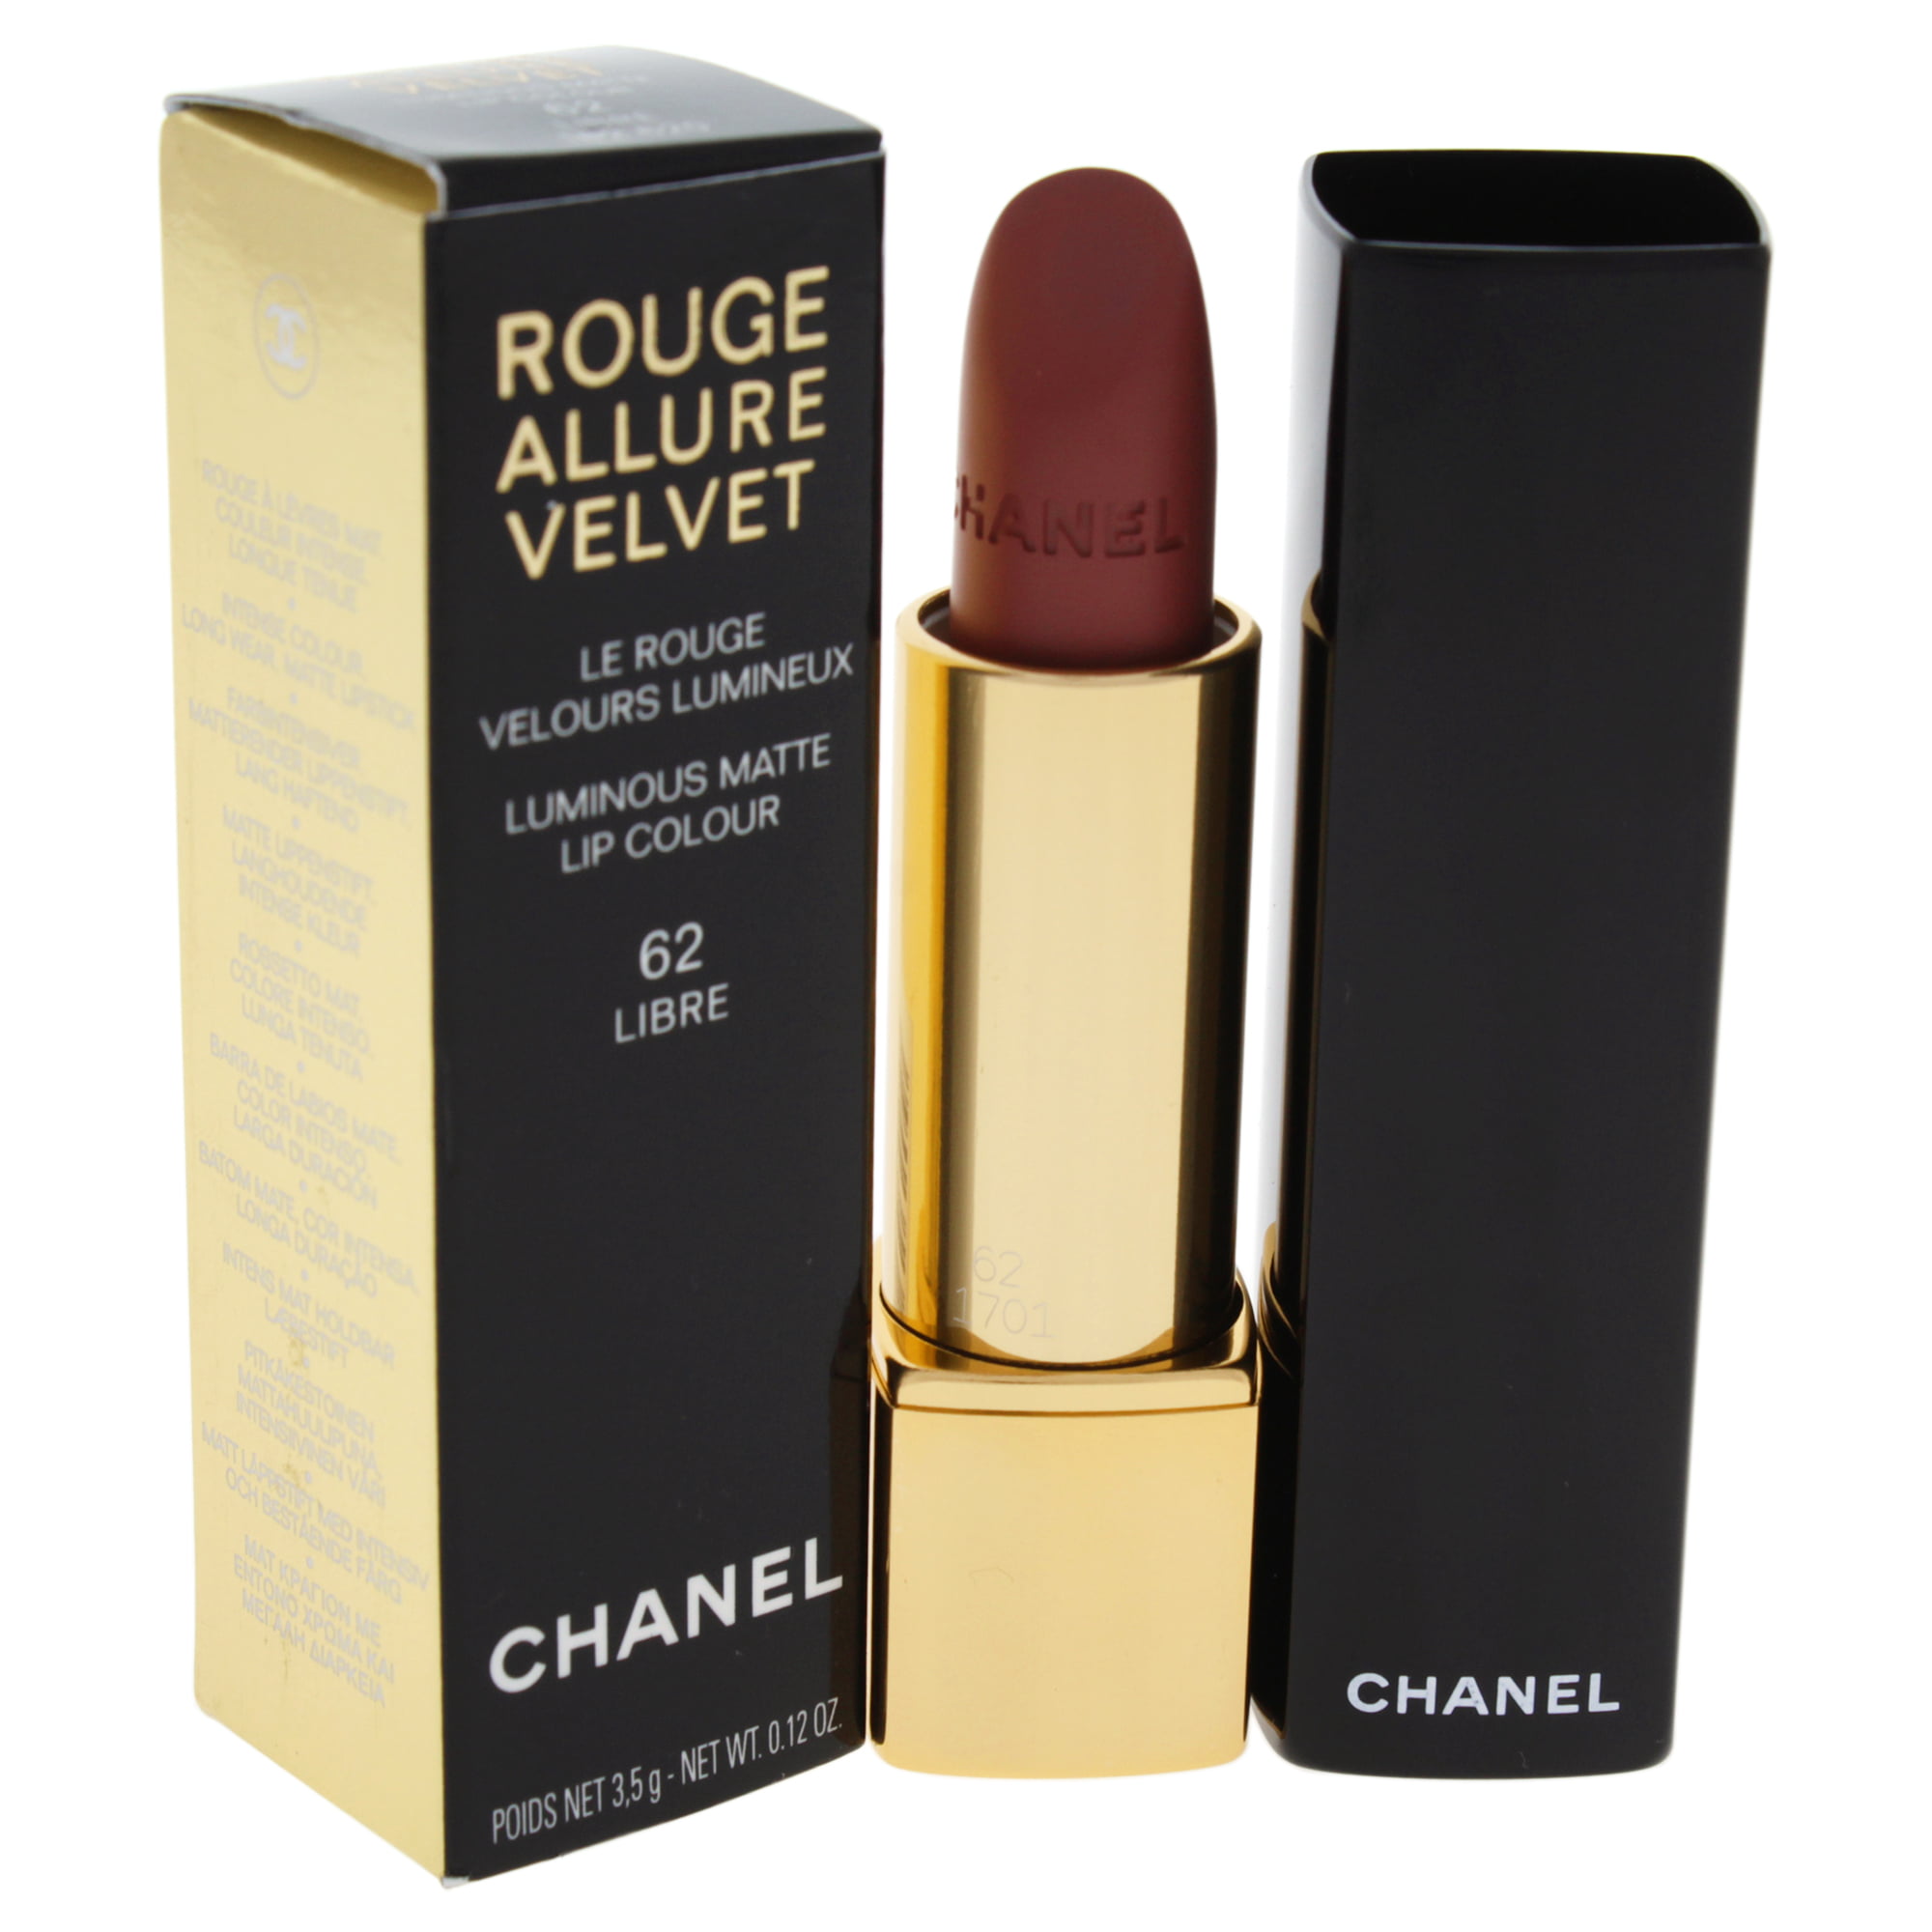 Chanel Rouge Allure Velvet in 62 Libre #makeup #welovecoco